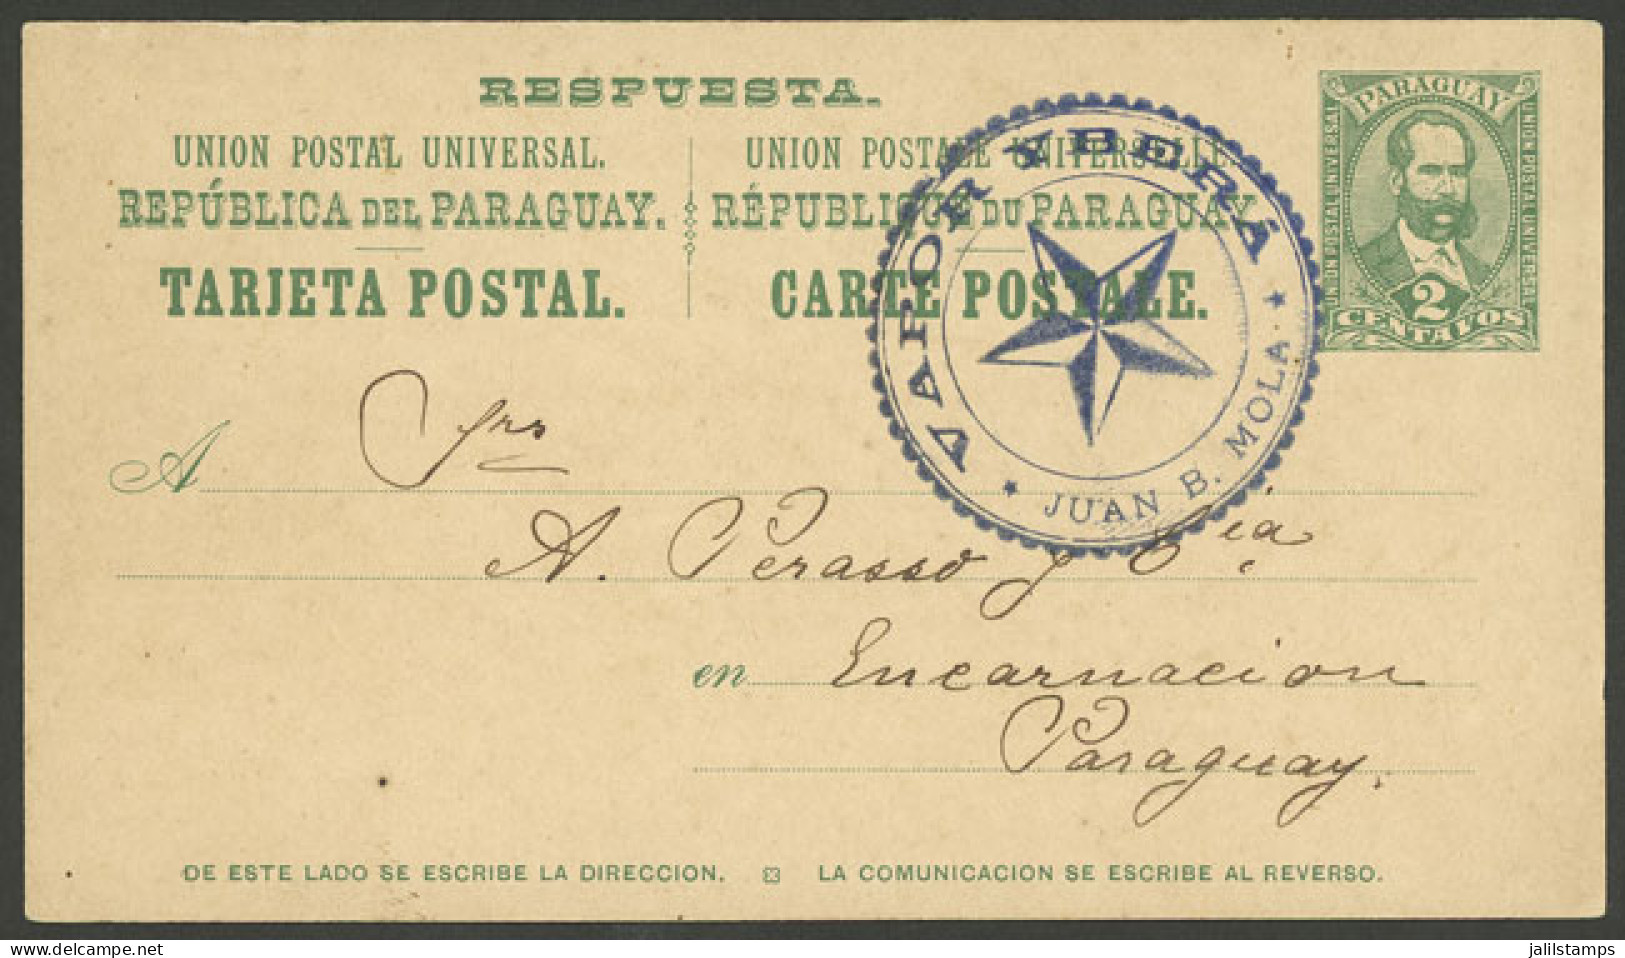 PARAGUAY: 25/DE/1907 YAGUARAZAPIÁ - Encarnación, 2c. Postal Card With Extremely Rare River Mail Marking: "VAPOR YBERÁ -  - Paraguay